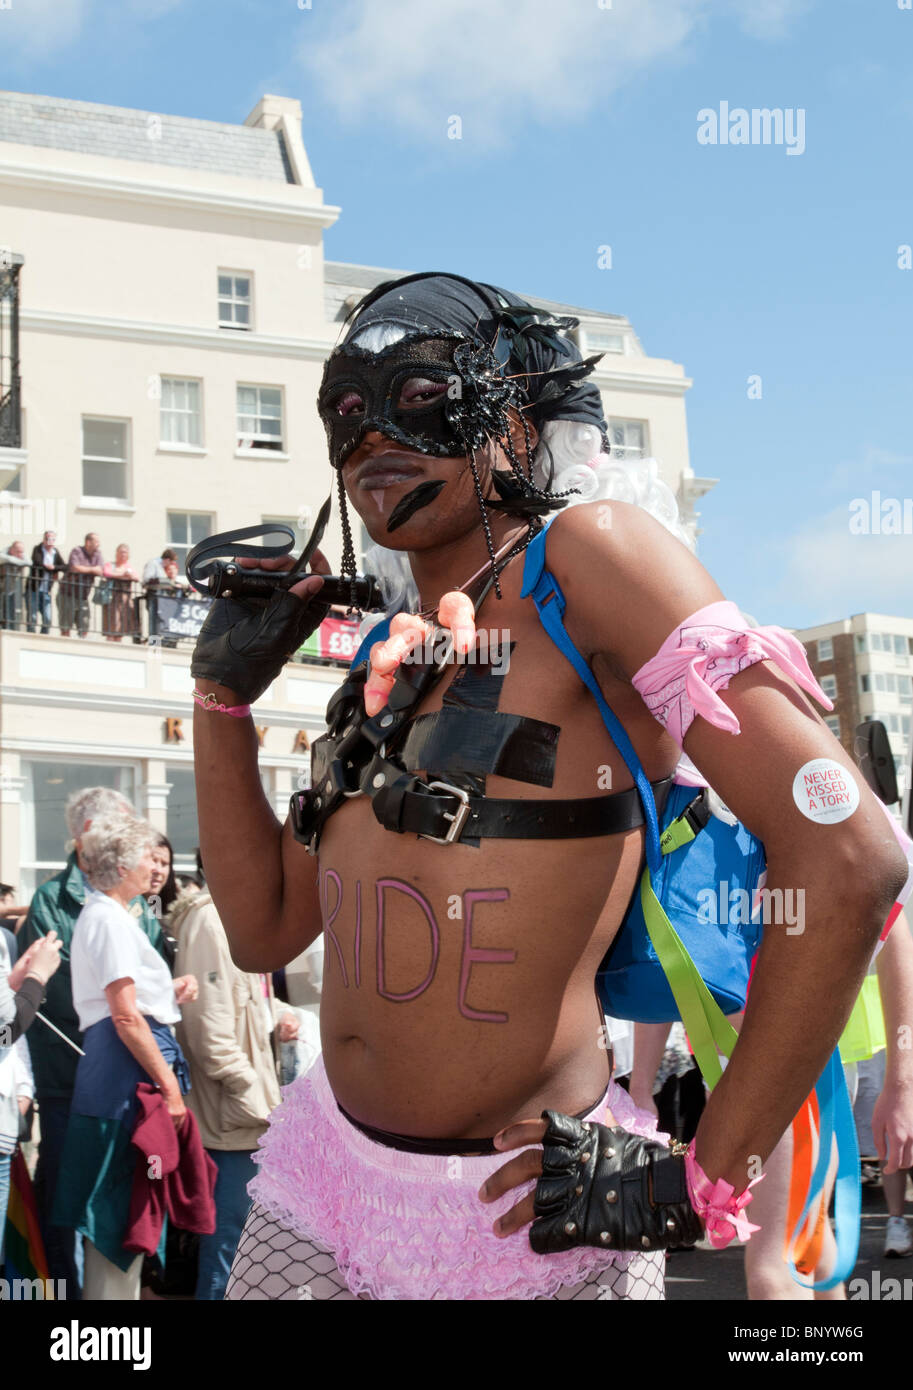 BRIGHTON, ENGLAND, UK - The parade during Brighton Pride, the annual Gay Pride event. Stock Photo